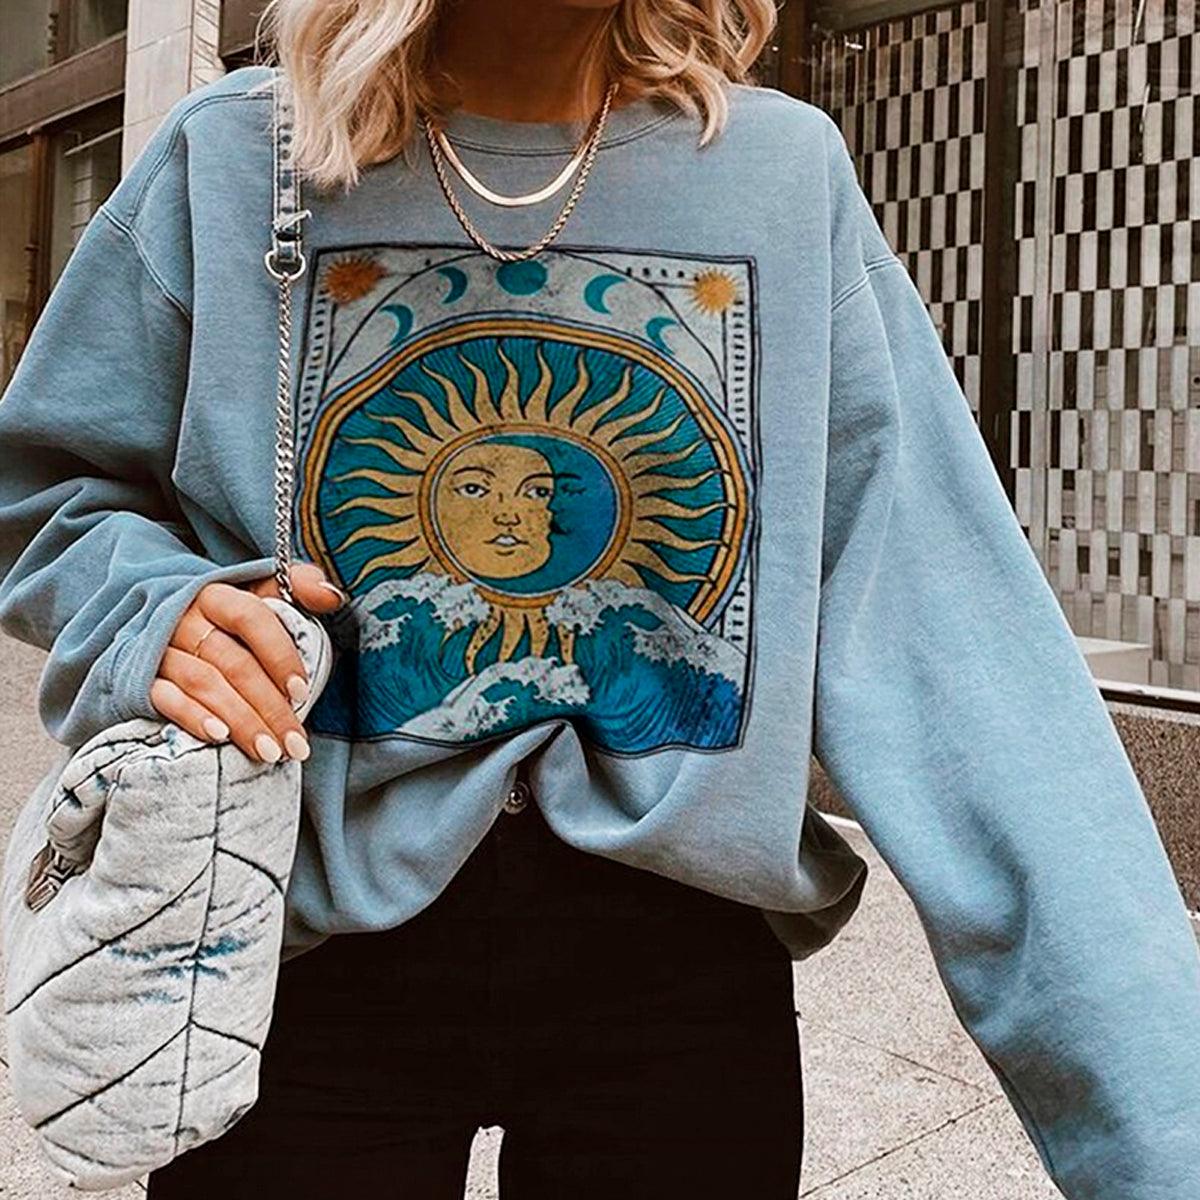 Sun and Moon Love Pale Blue Sweatshirt - Aesthetic Clothes Shop